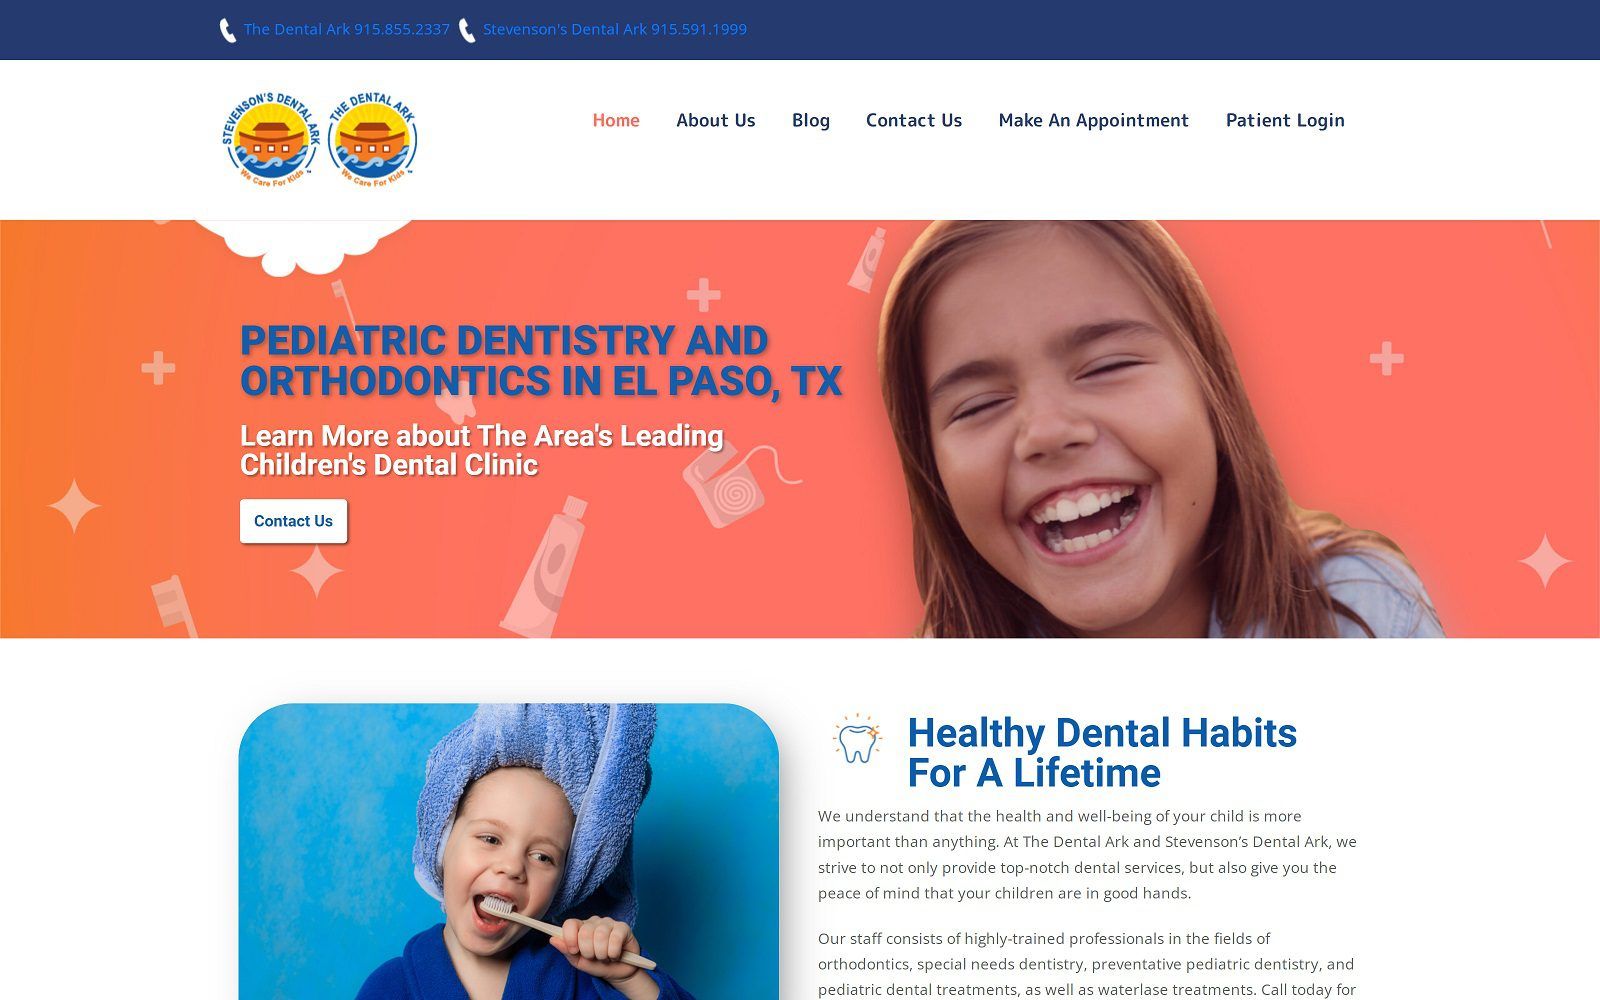 The screenshot of the dental ark website